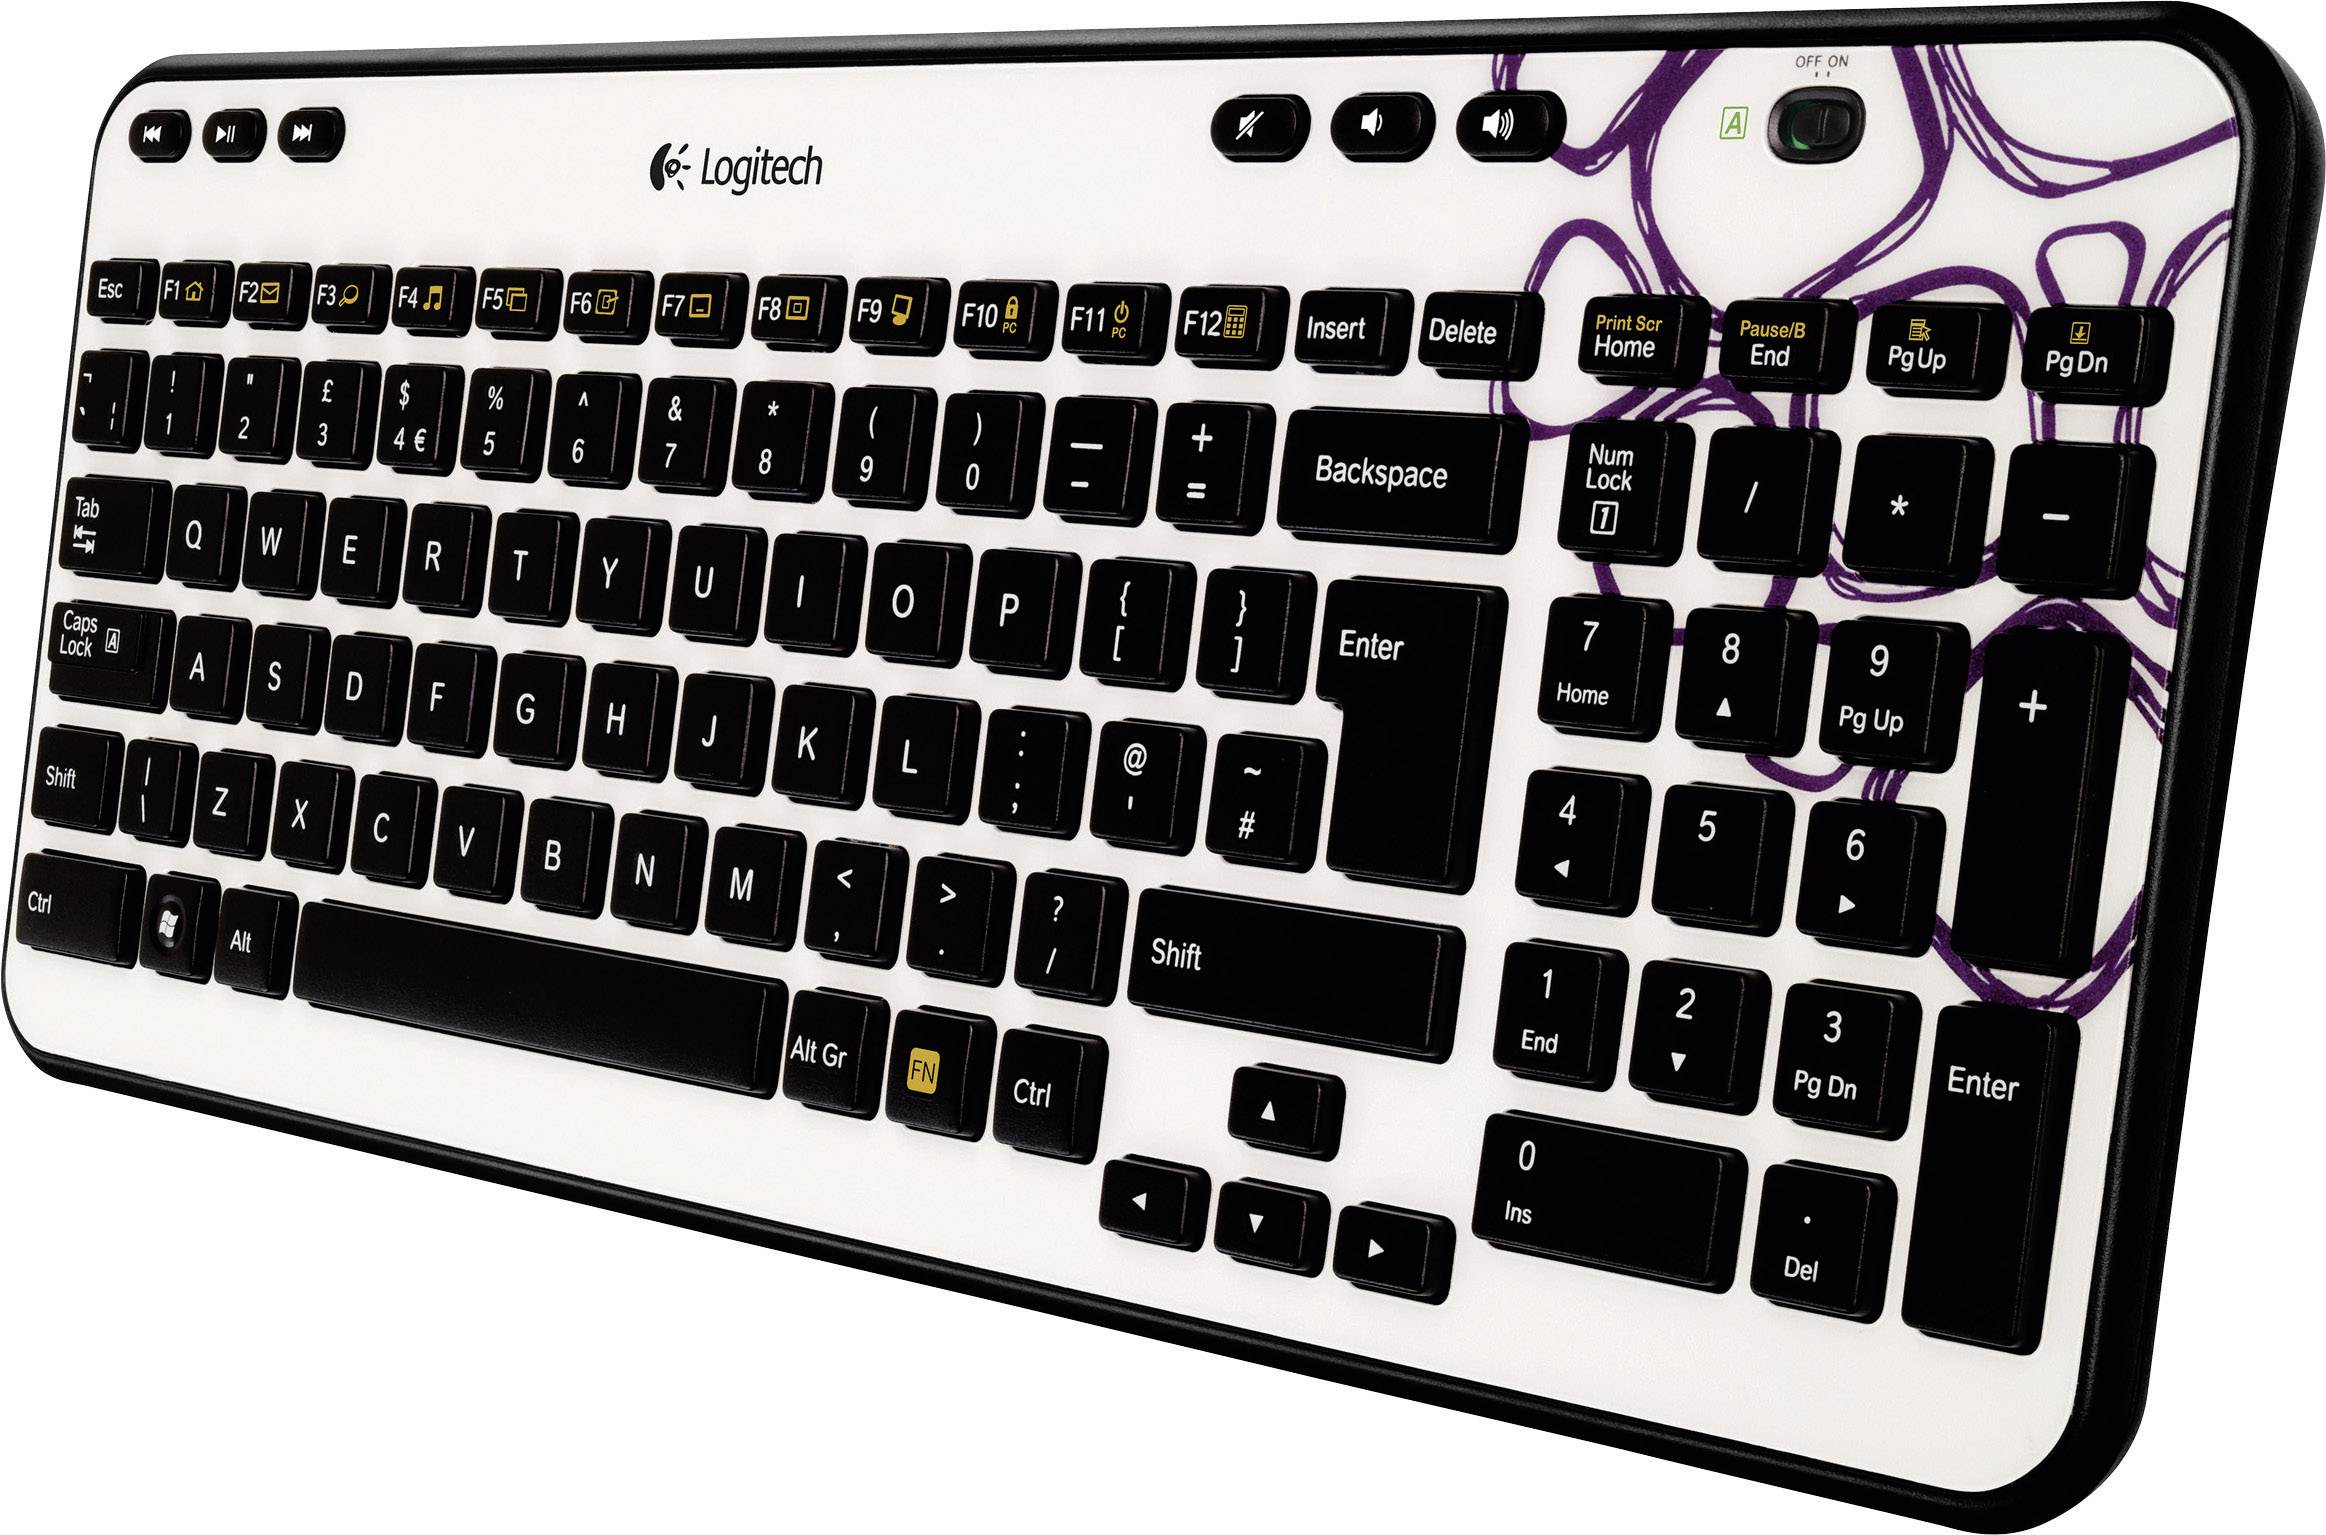 Mac and Linux Grey with Ambidextrous Design Logitech K360 Wireless Keyboard Black UK layout & M185 Wireless Mouse USB for PC Windows